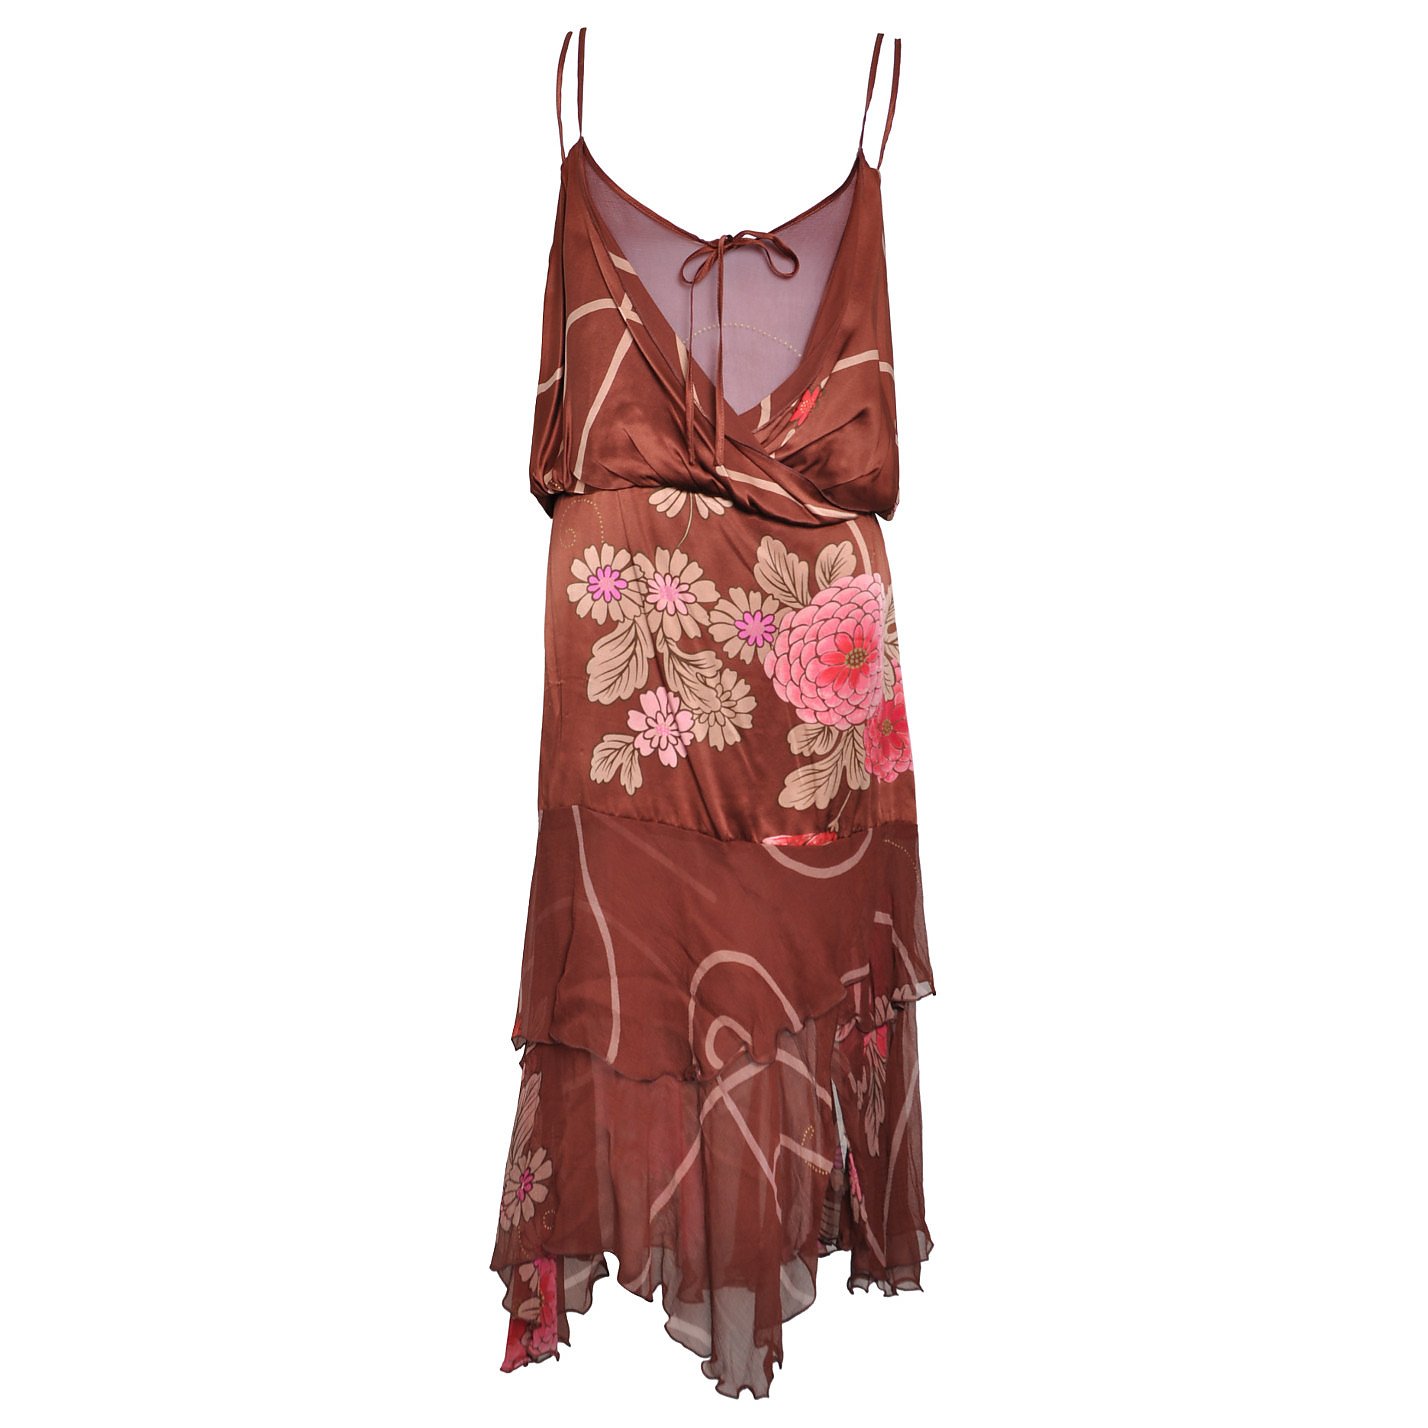 Ungaro Tiered Floral-Print Dress